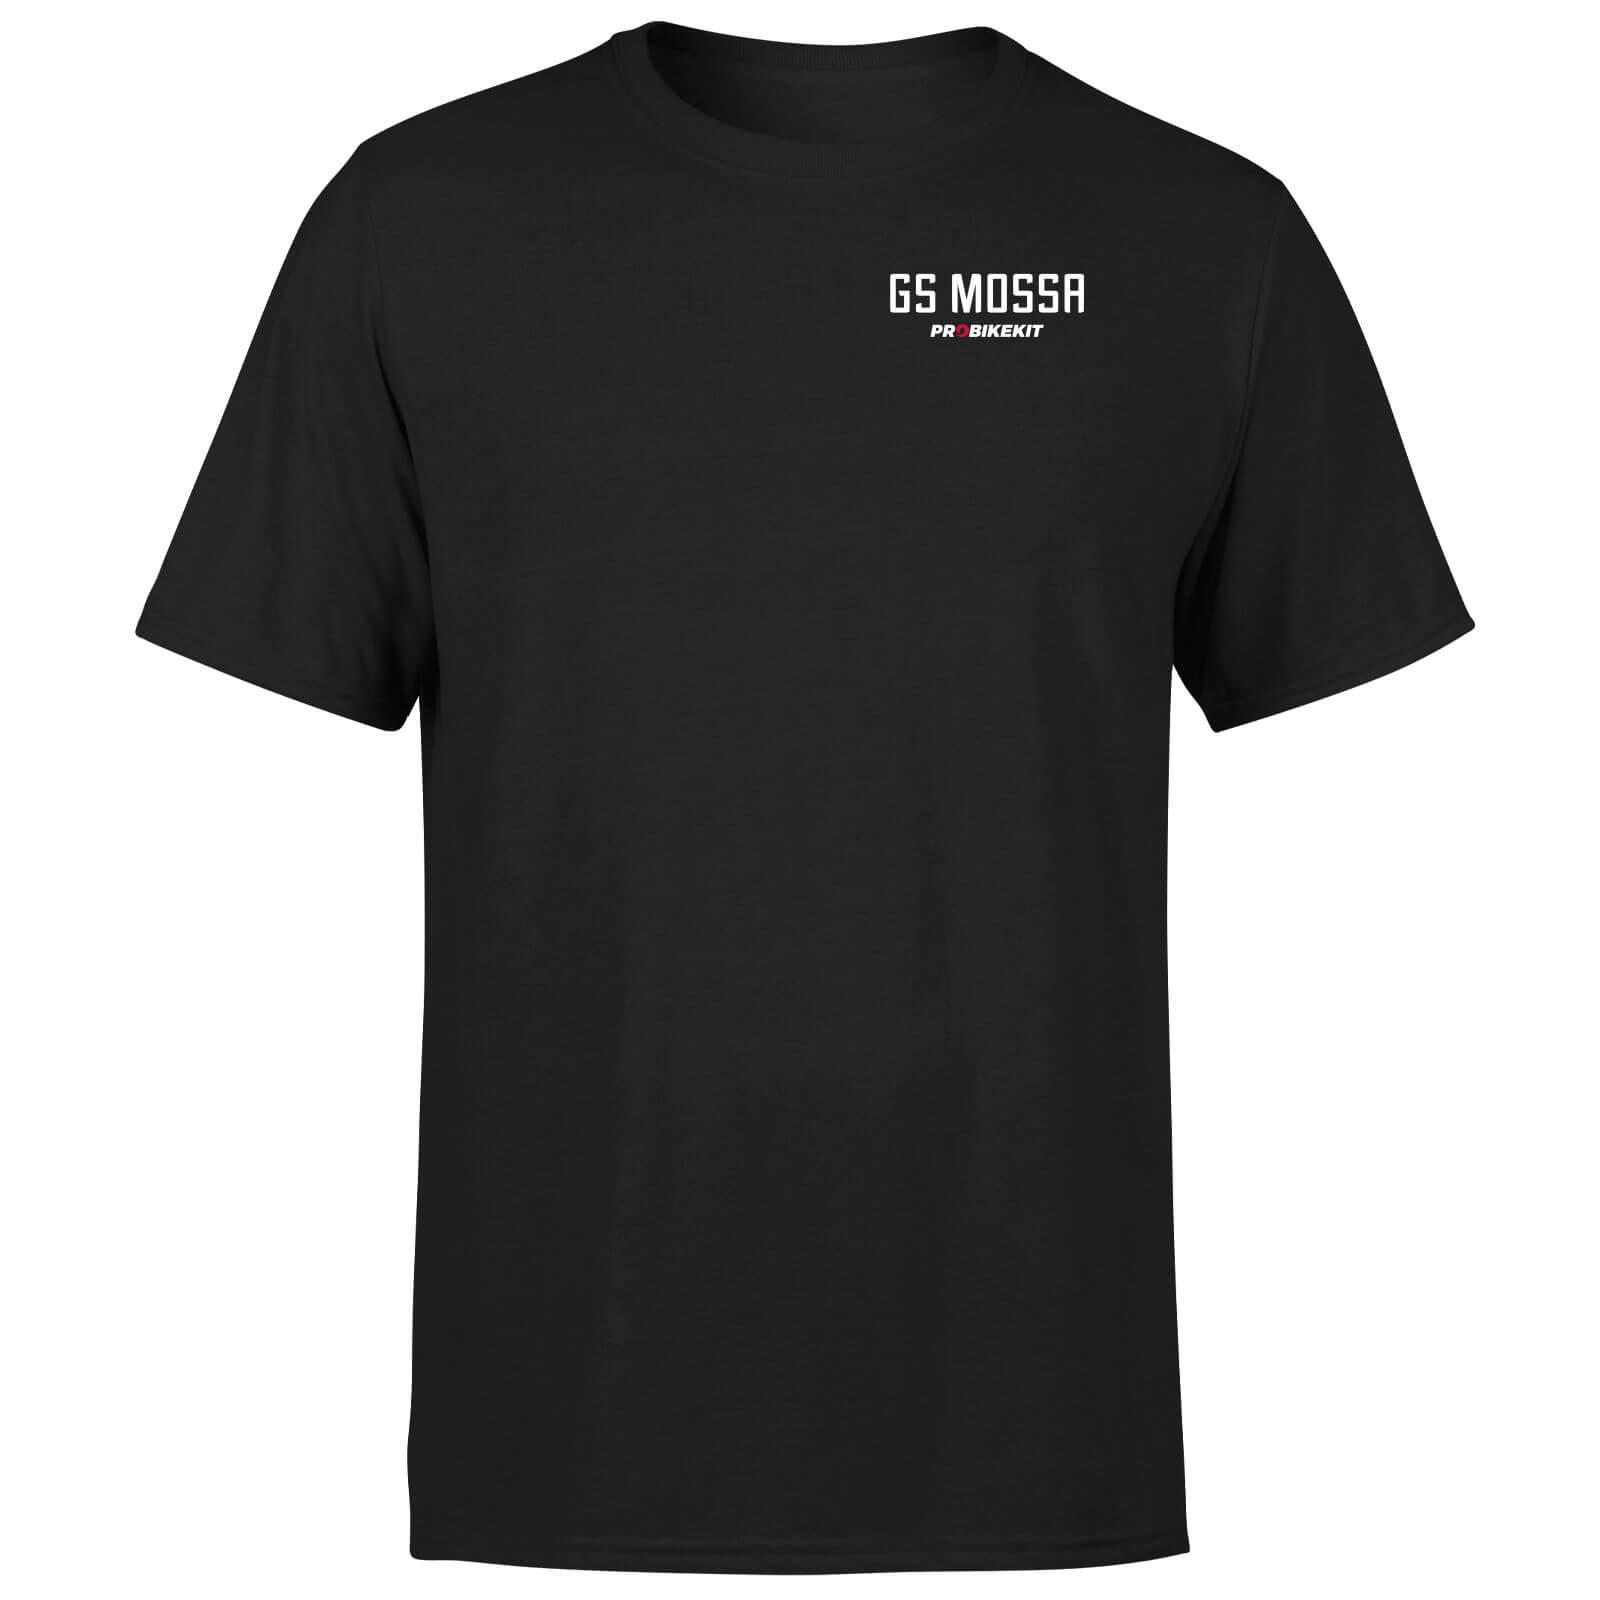 PBK GS Mossa Pocket Print Aqua Wave Men's T-Shirt - Black - M - Schwarz